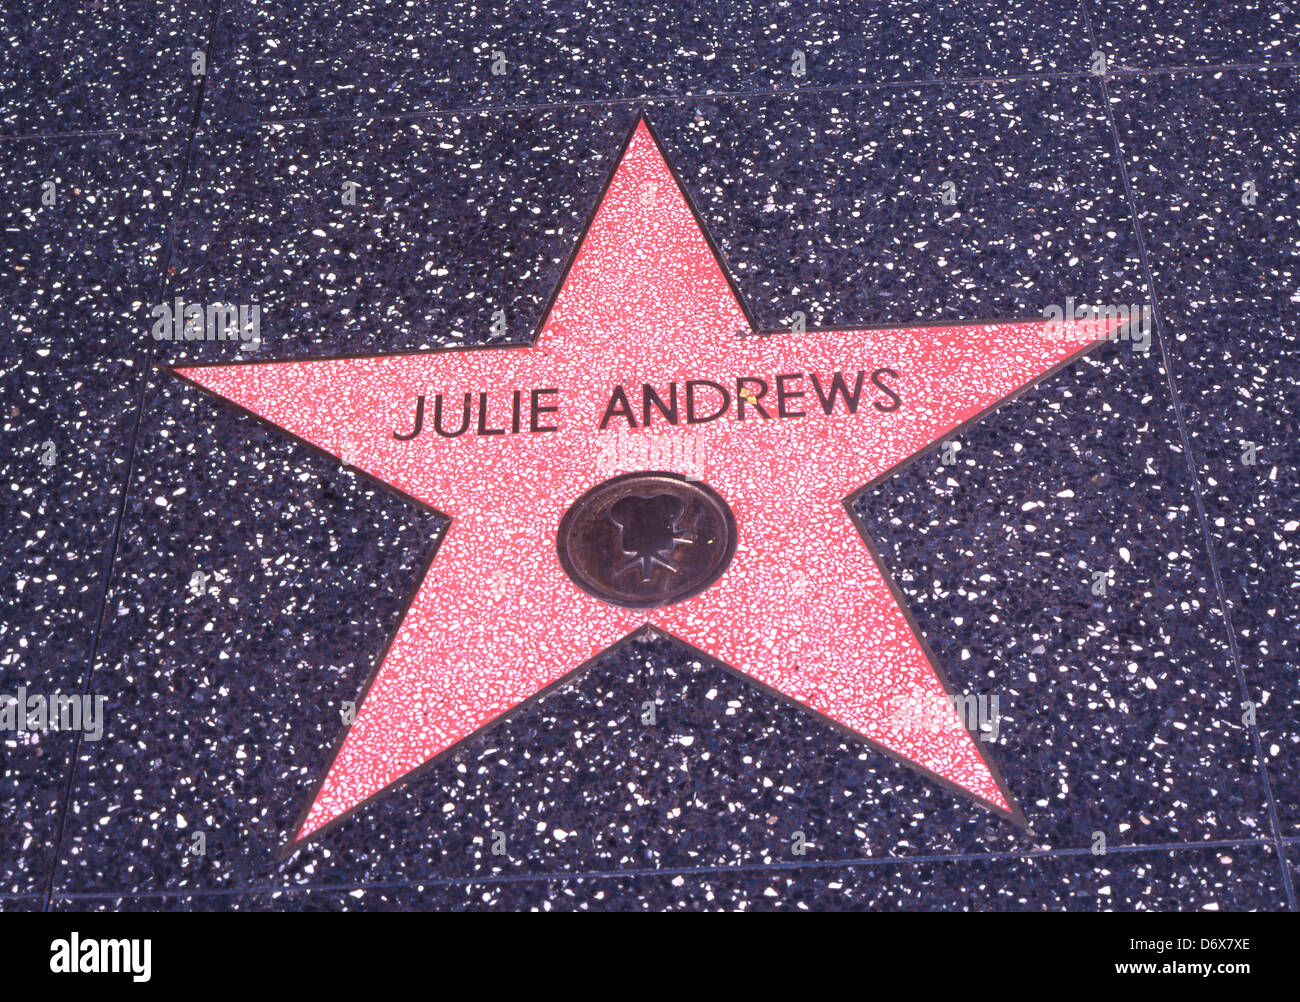 Julie Andrews's Star on Hollywood Boulevard, California, USA Stock Photo